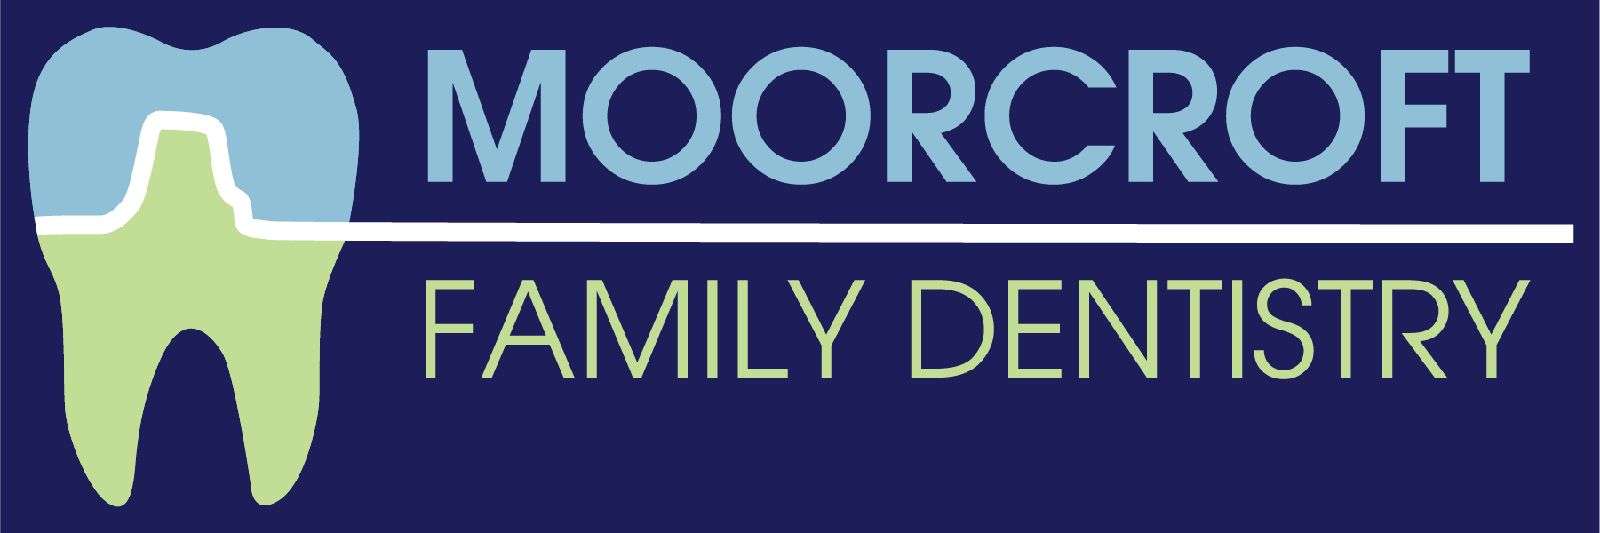 Moorcroft Family Dentistry's Image